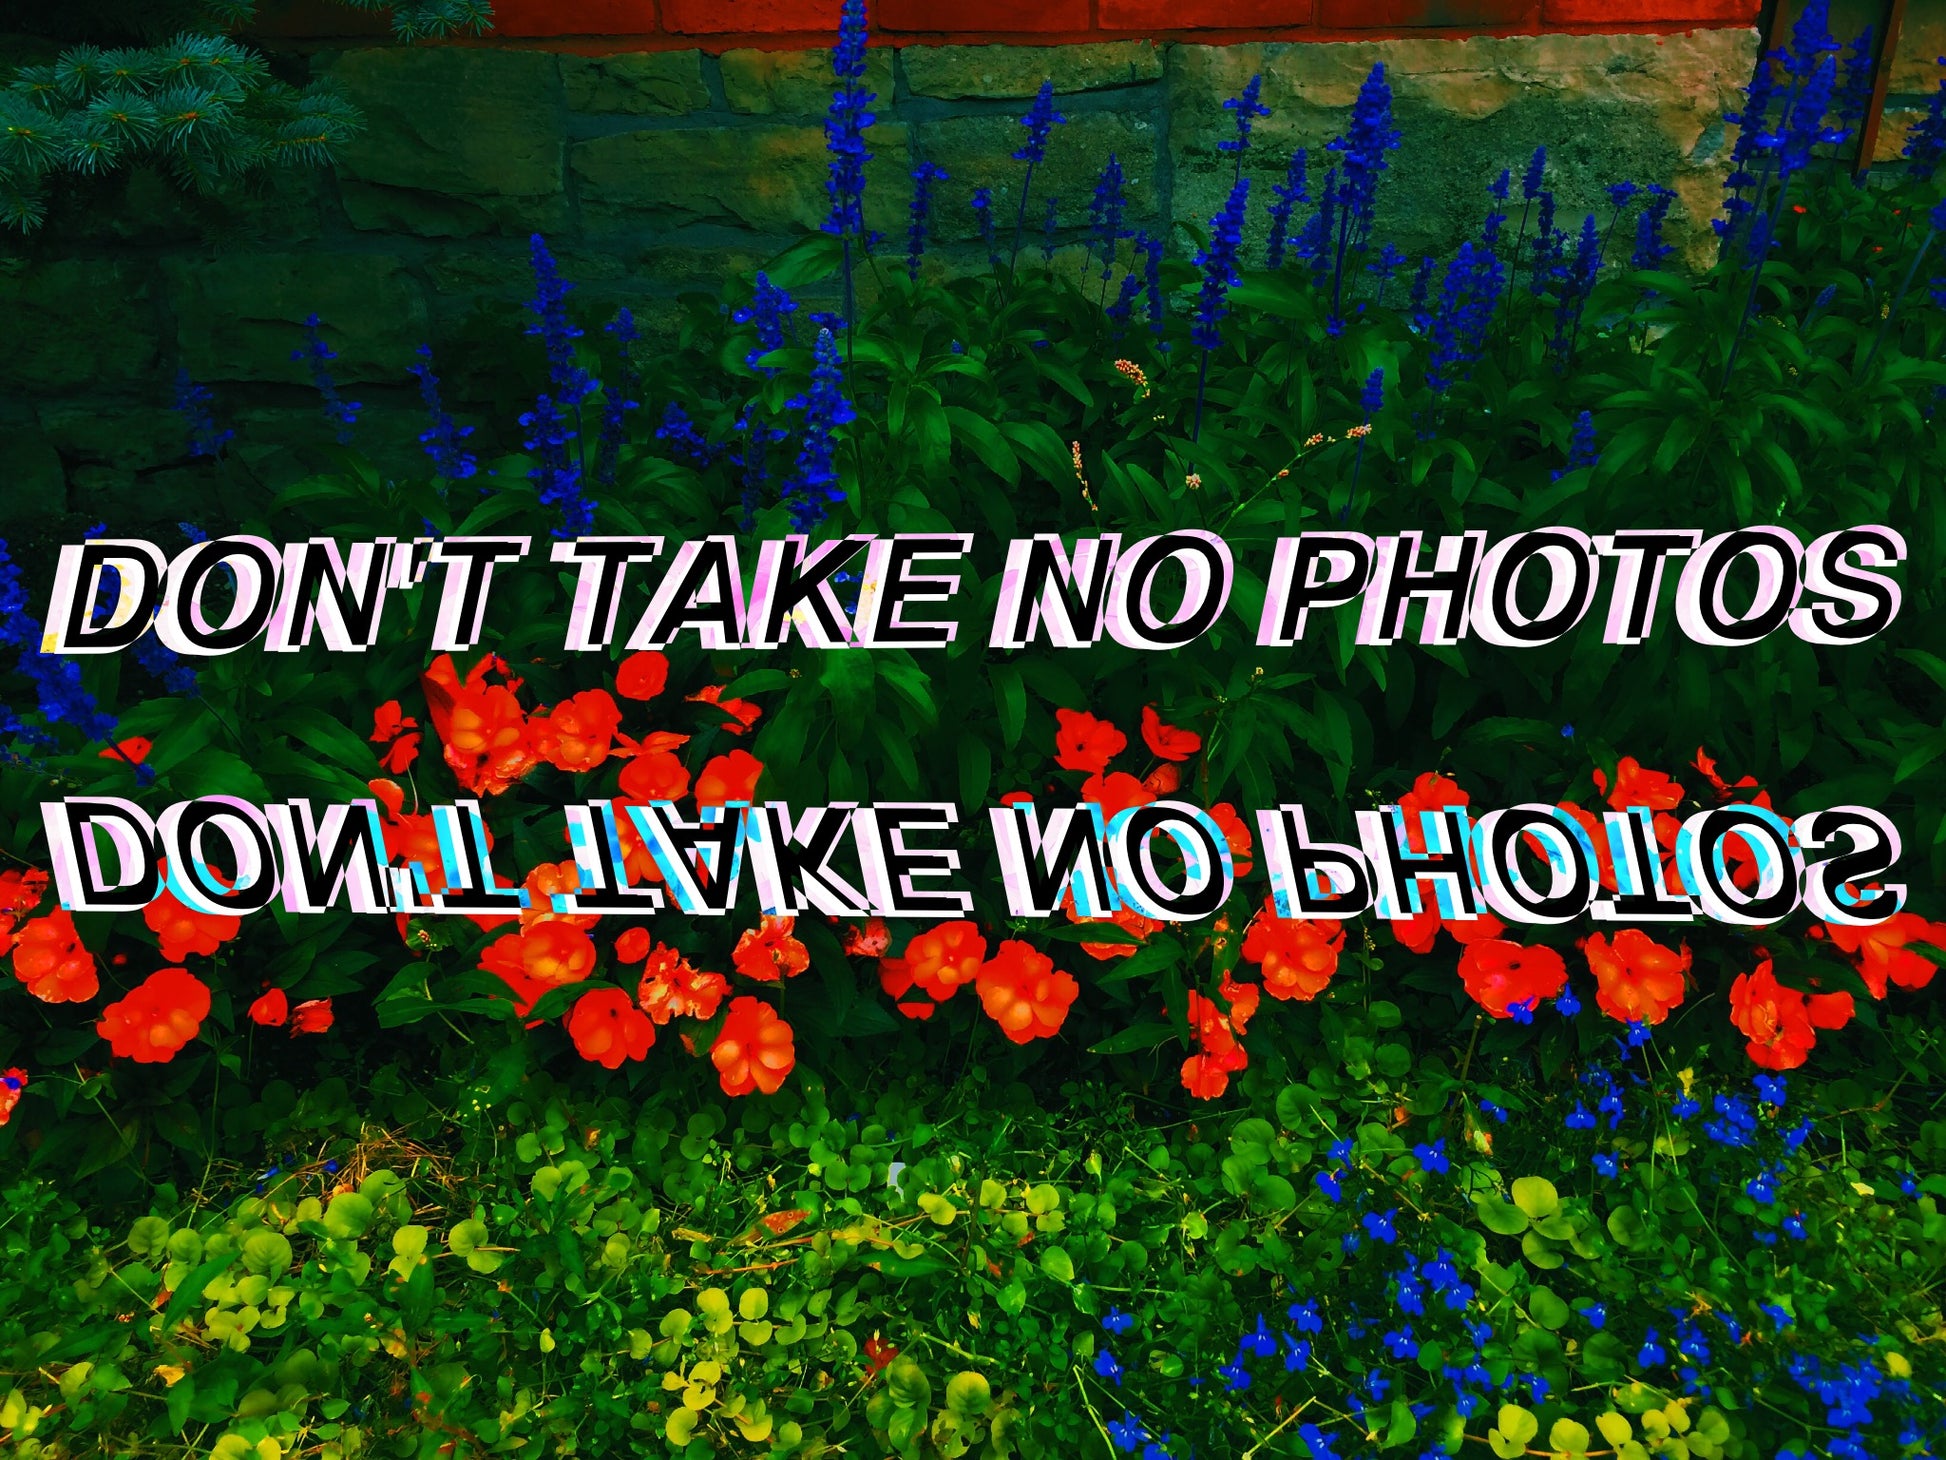 DON'T TAKE NO PHOTOS - Limited Print by BOYSDONTDRAW